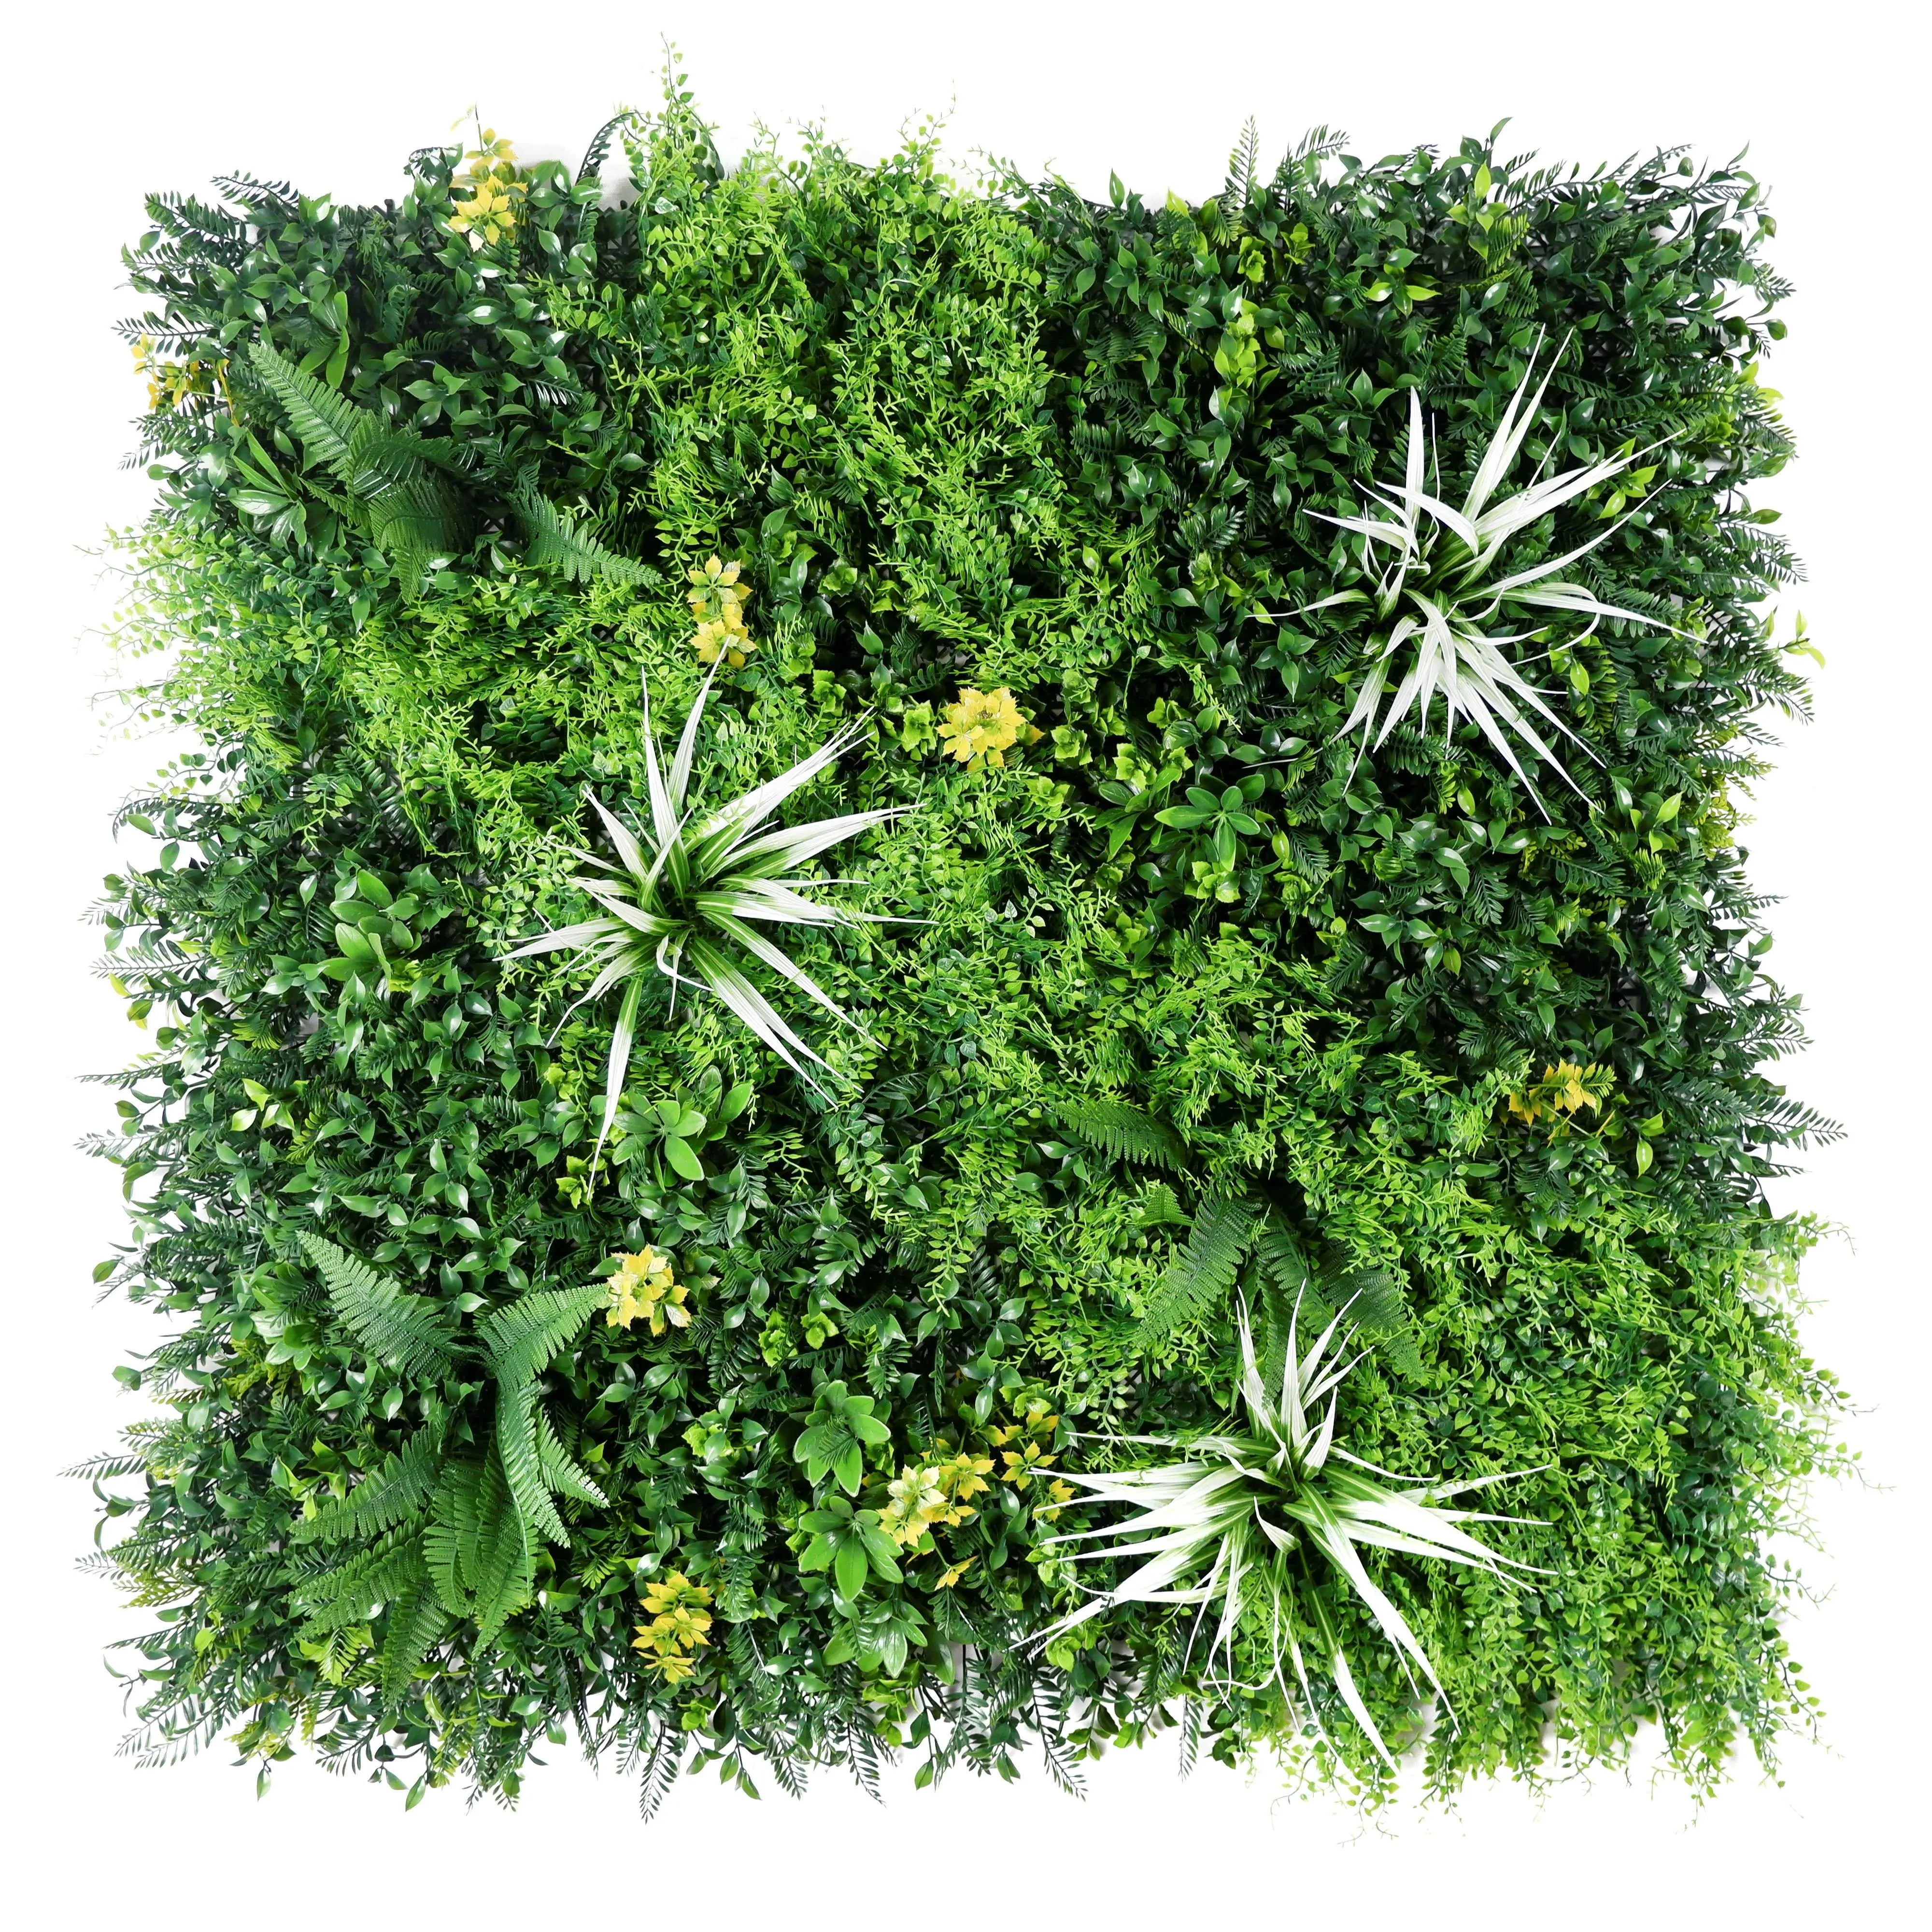 Cetakan batu buatan tanaman dinding, dedaunan hijau buatan dinding rumput taman dinding buatan